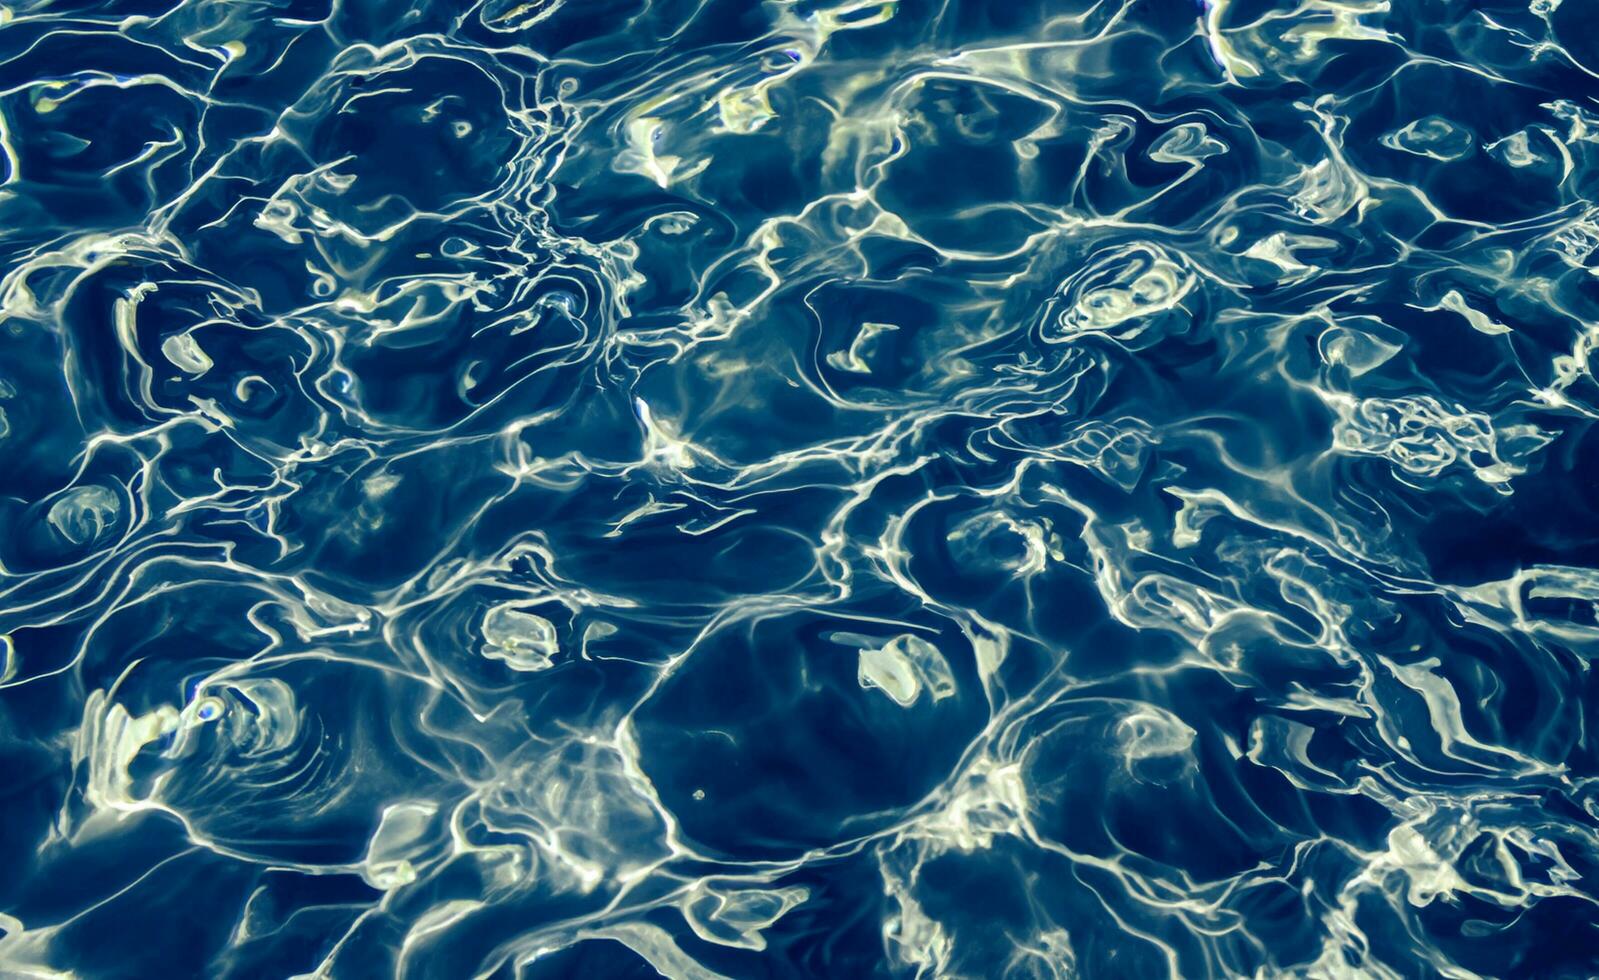 blå vattenytabakgrund foto